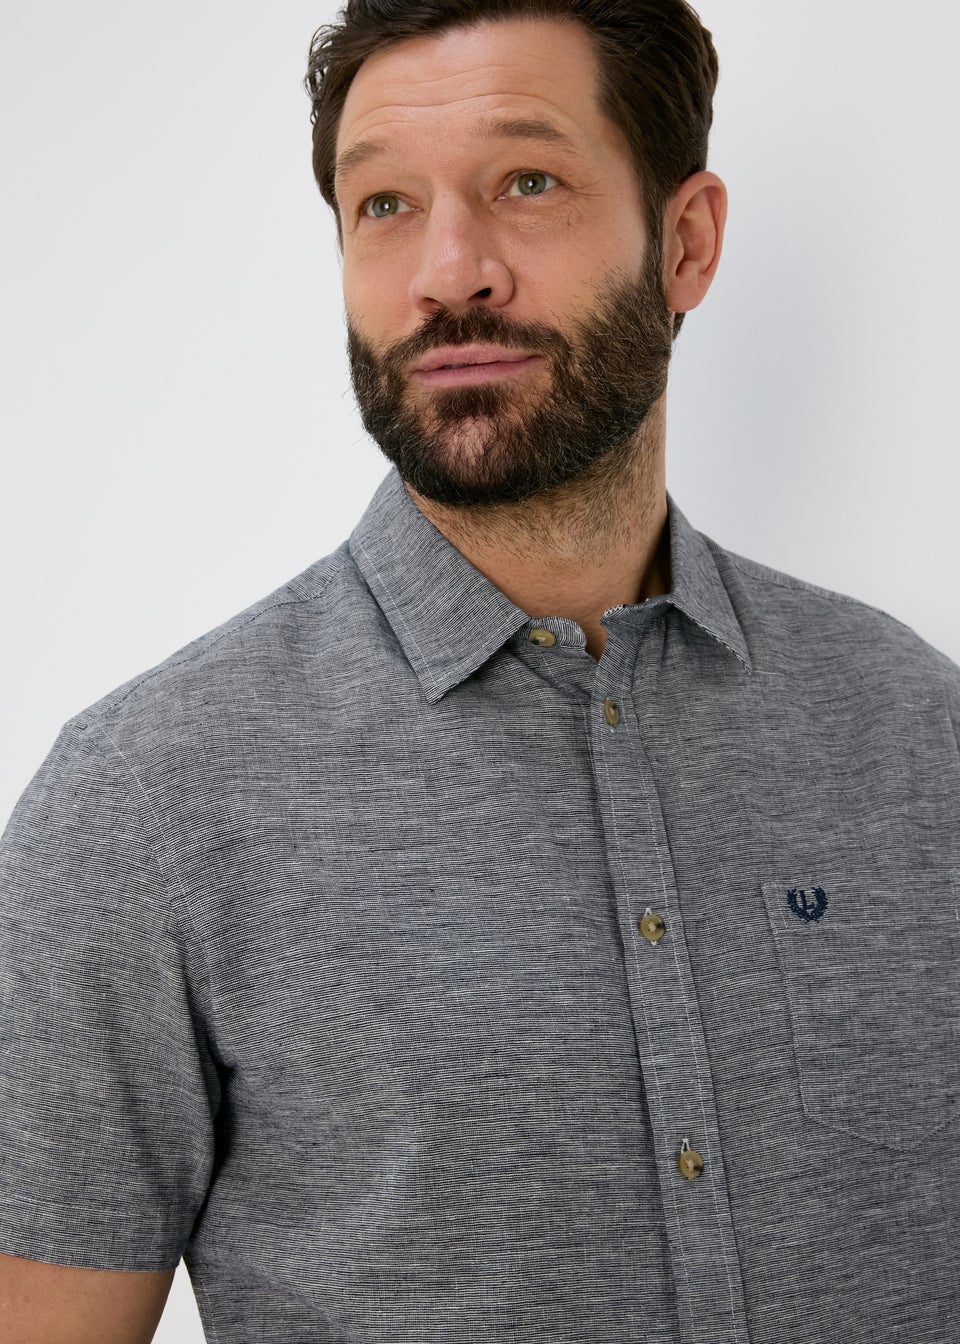 Lincoln Grey Short Sleeve Linen Shirt